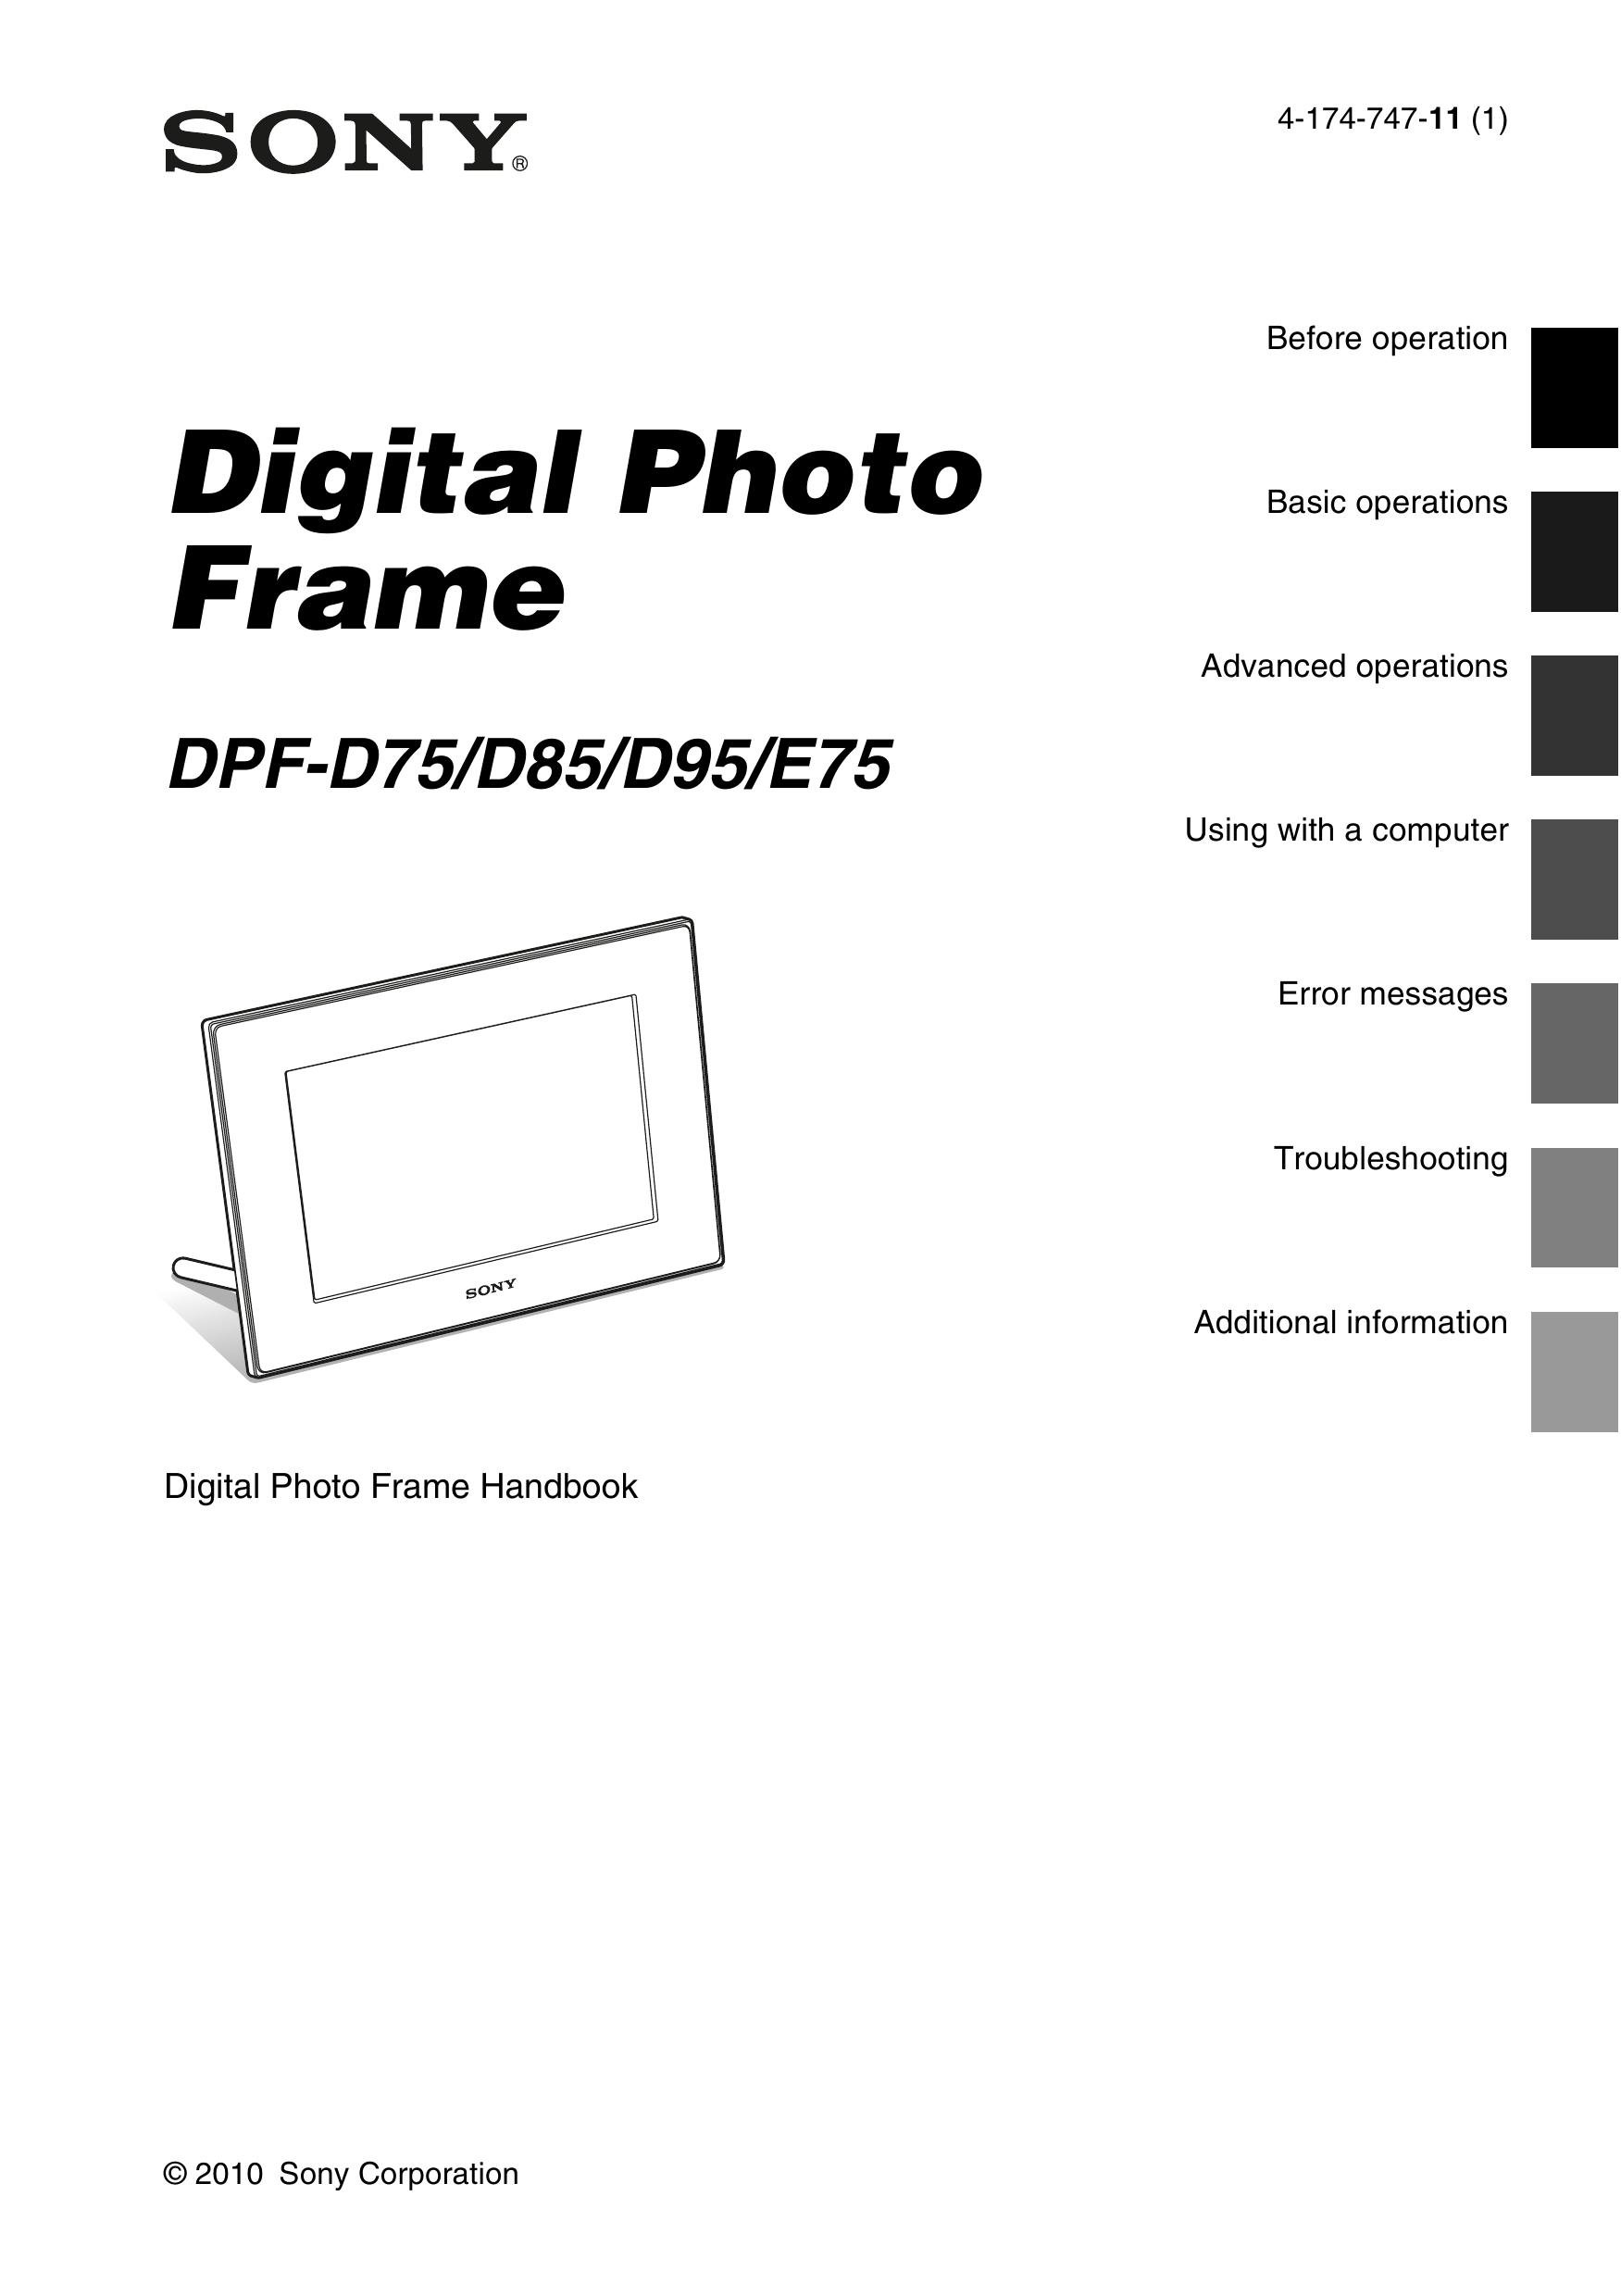 Sony DPF-D85 Digital Photo Frame User Manual